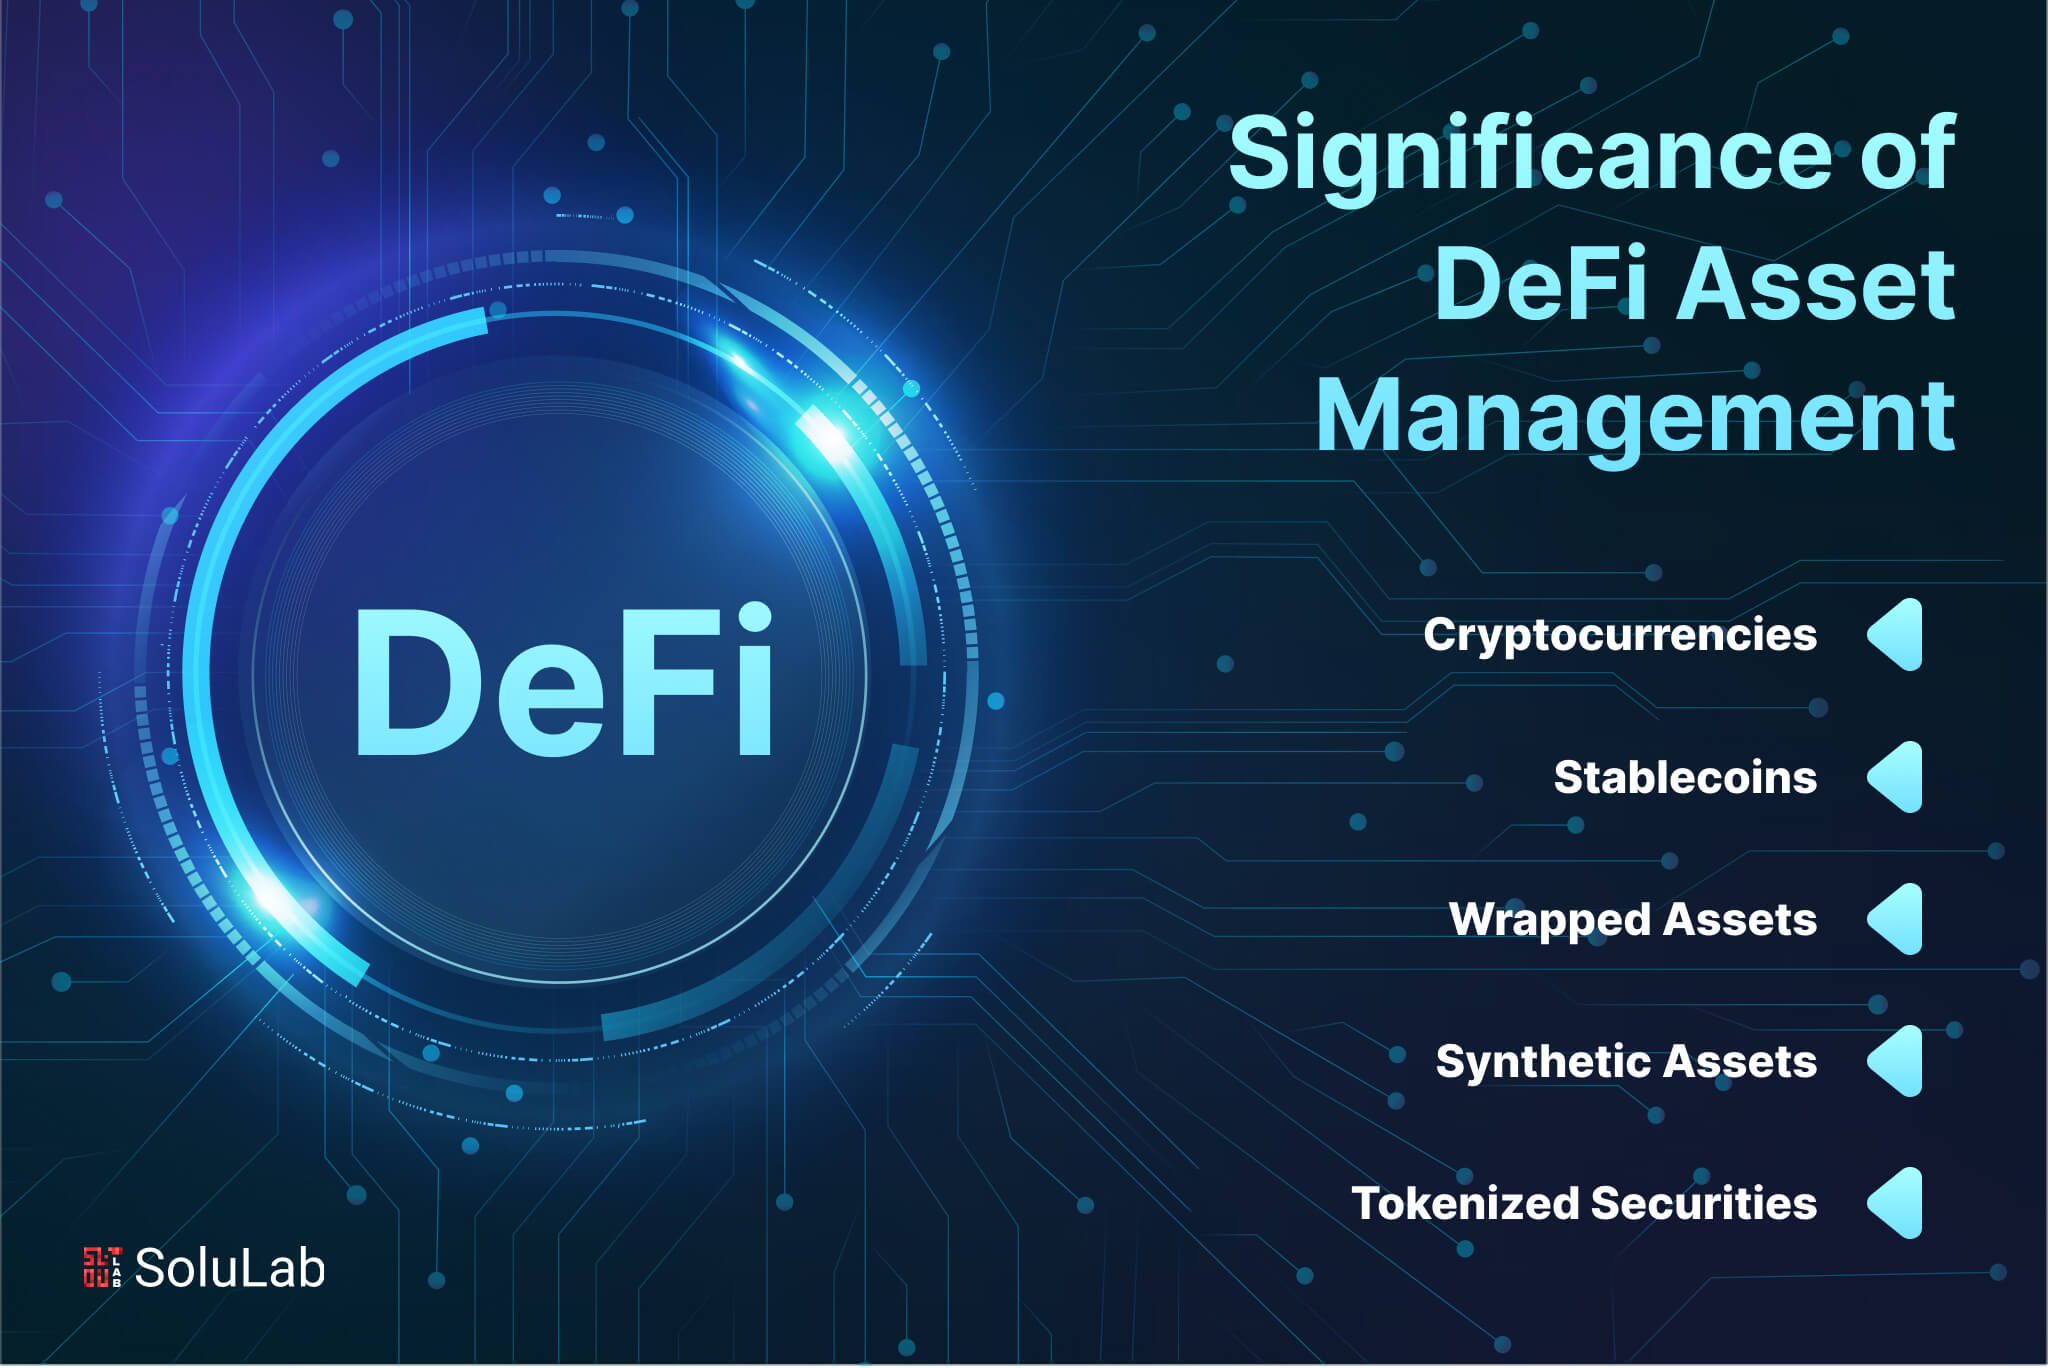 Significance of DeFi Asset Management